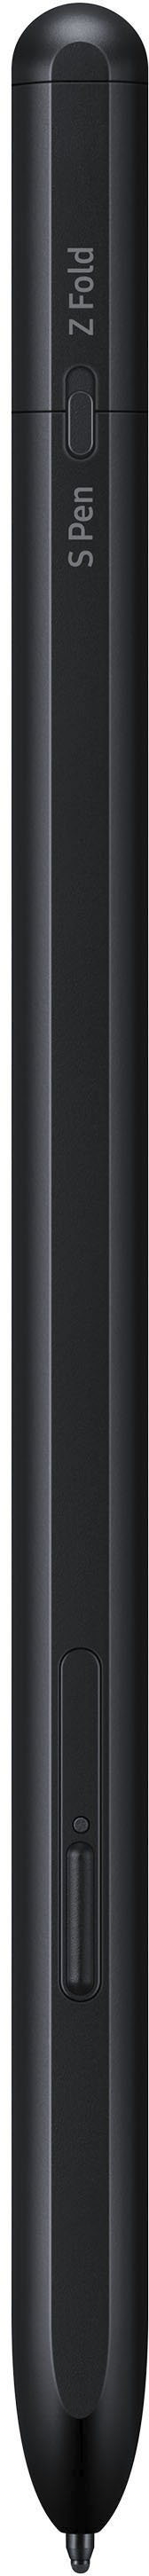 Samsung S Pen Pro Black EJ-P5450SBEGUS - Best Buy